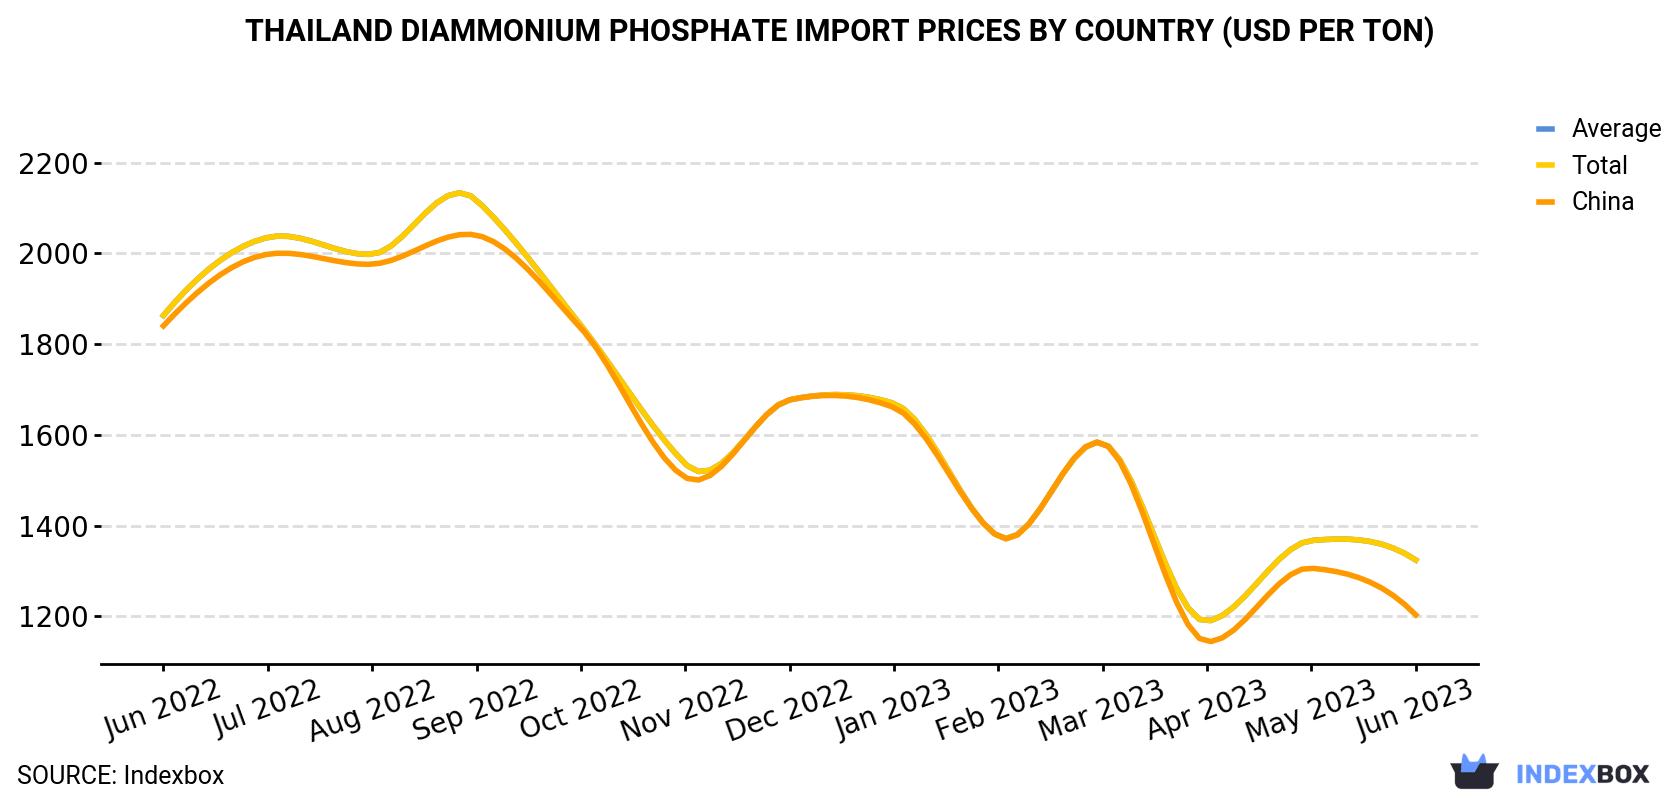 Thailand Diammonium Phosphate Import Prices By Country (USD Per Ton)